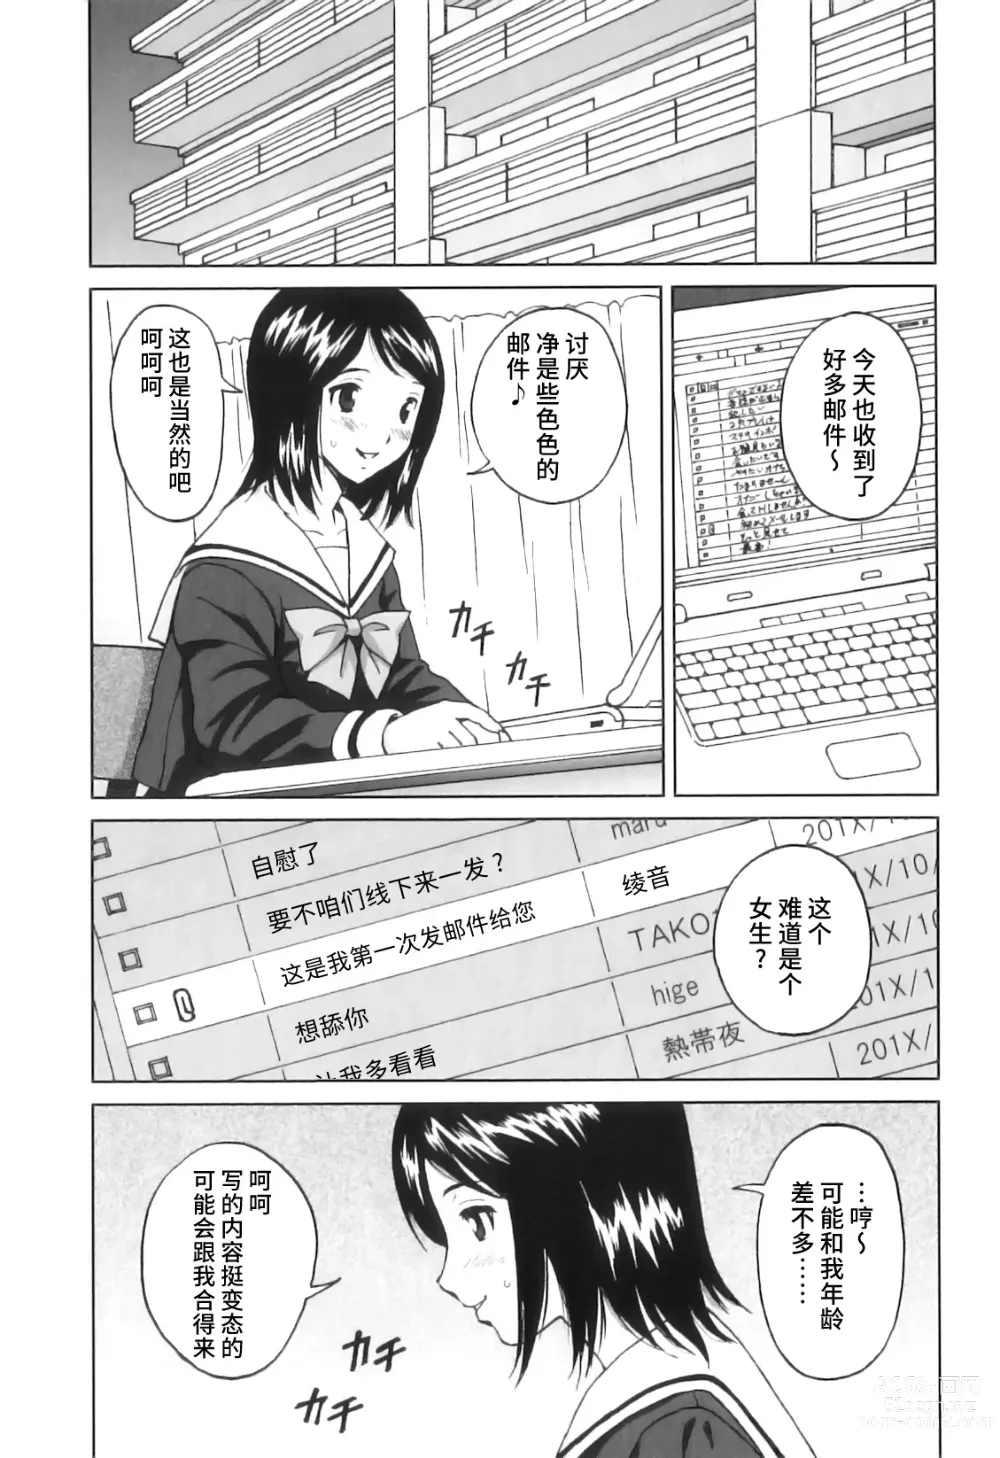 Page 17 of manga FutaSuki!